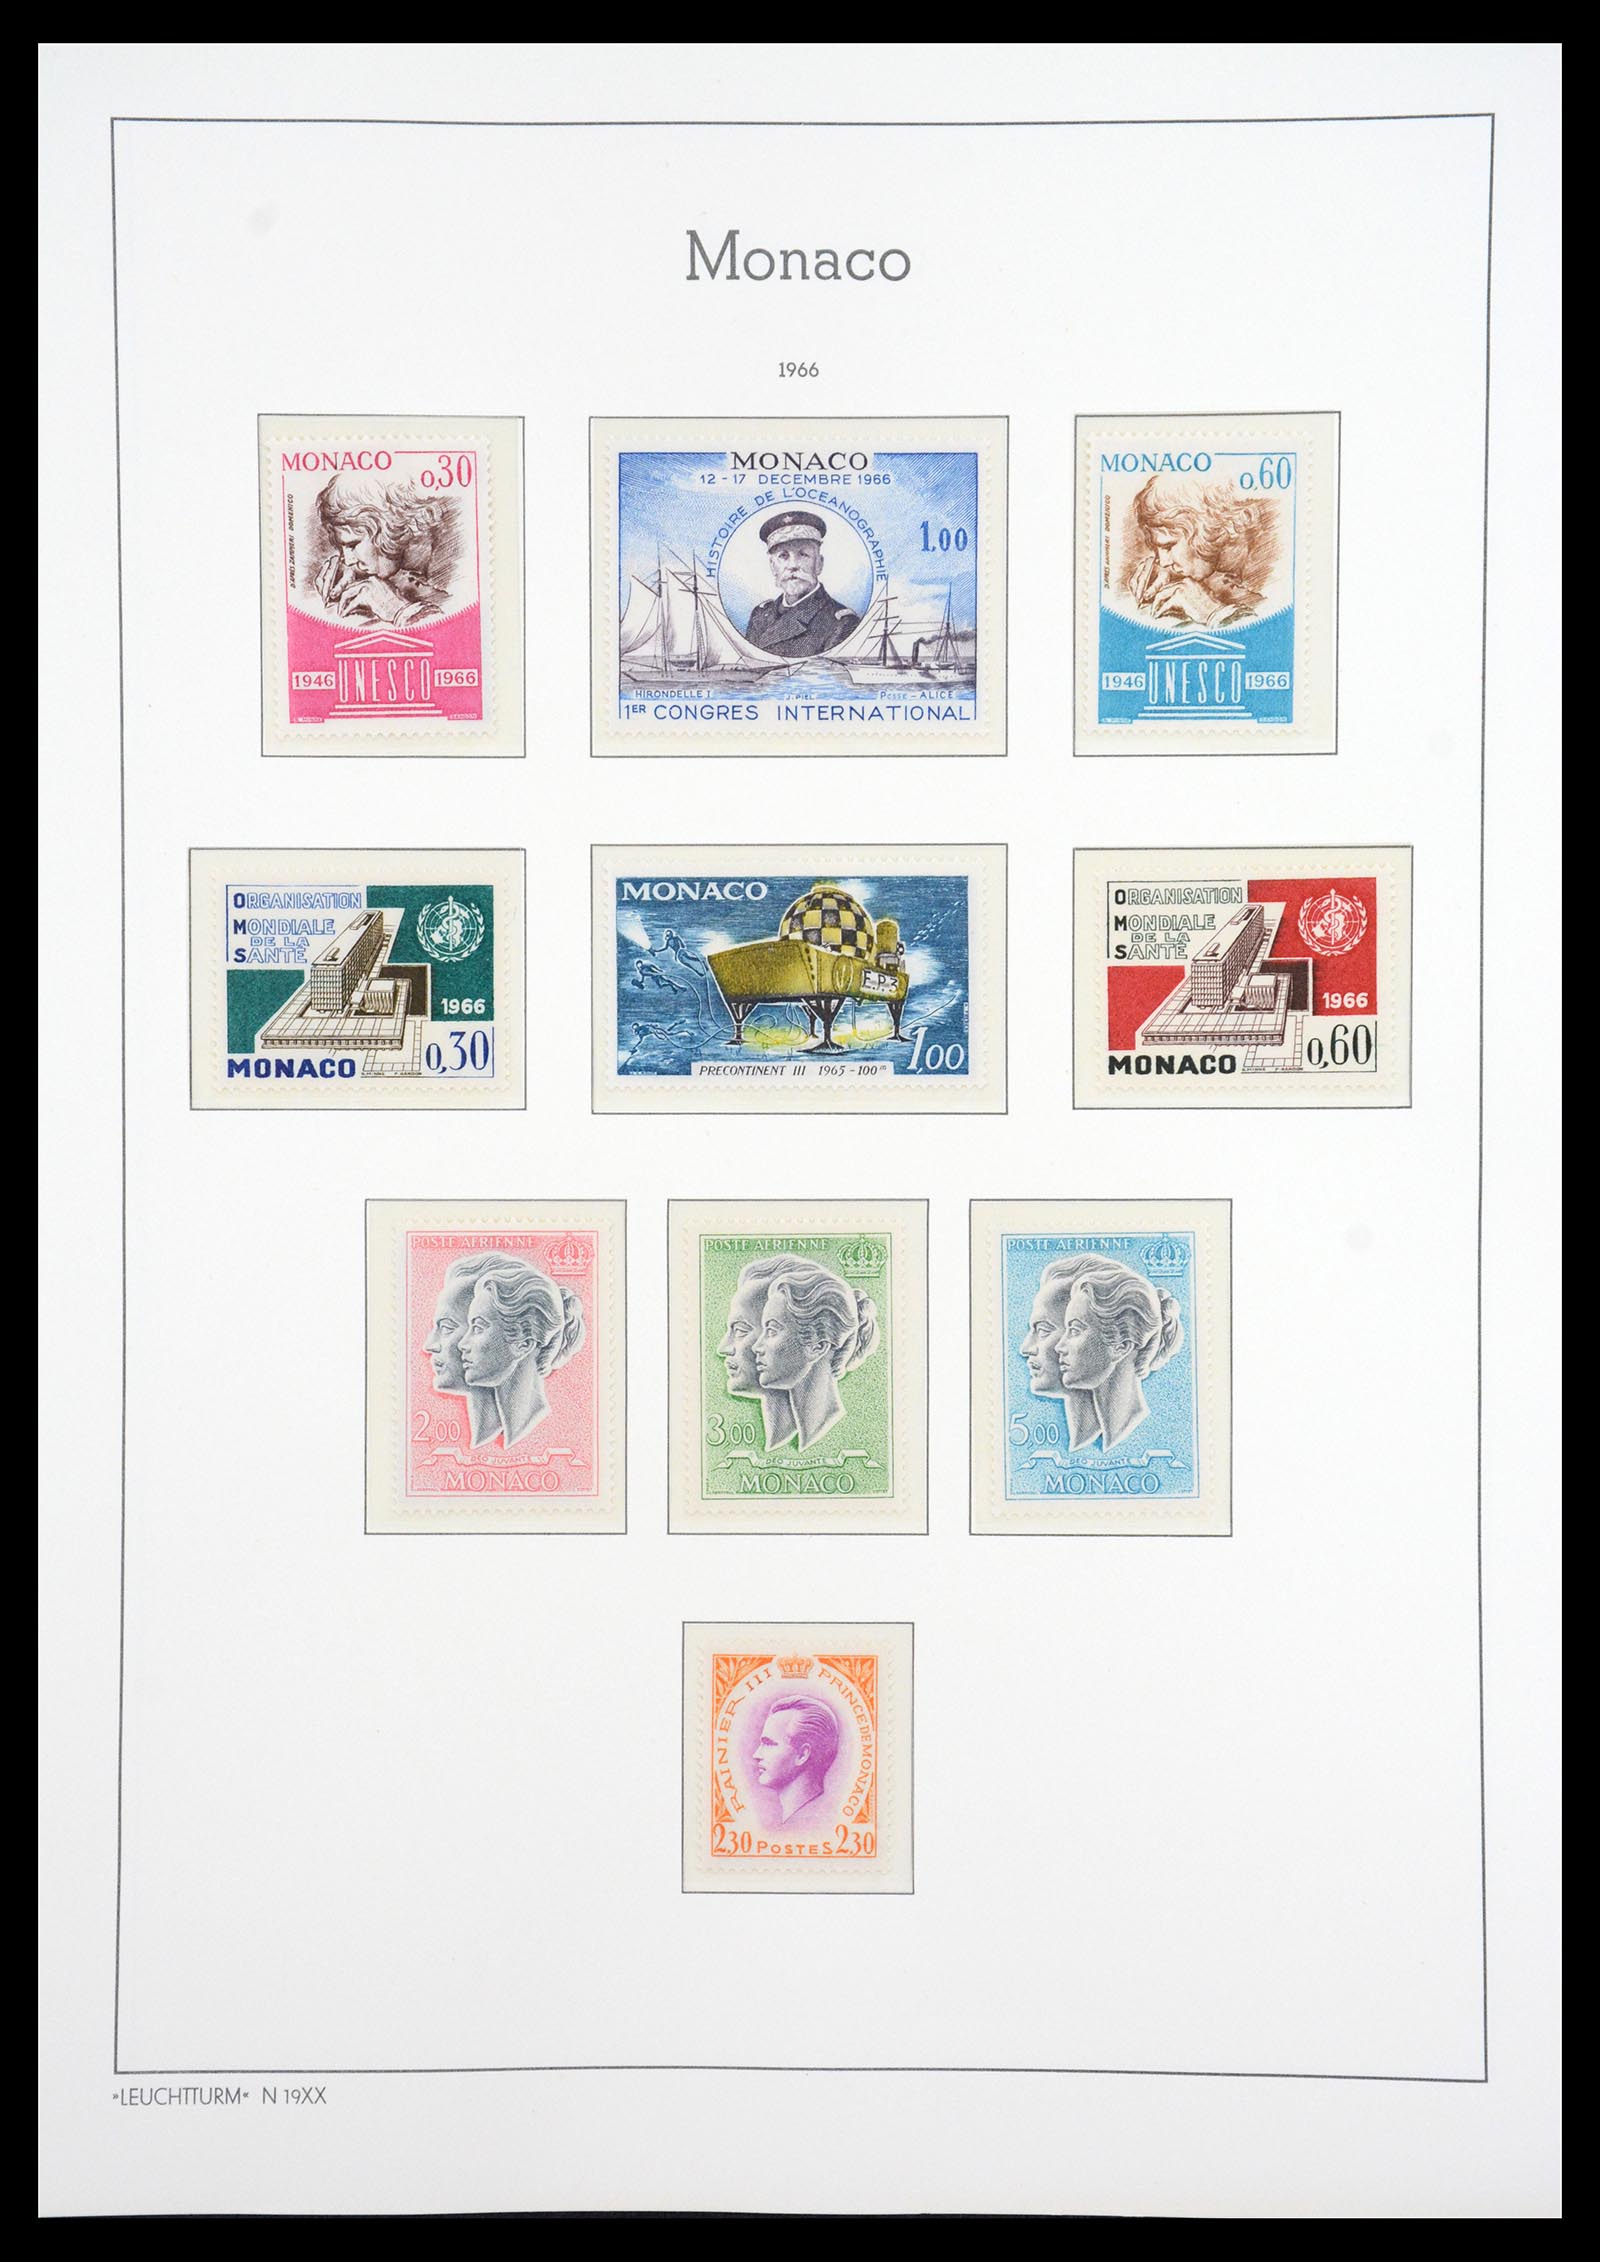 36735 094 - Stamp collection 36735 Monaco 1885-1966.